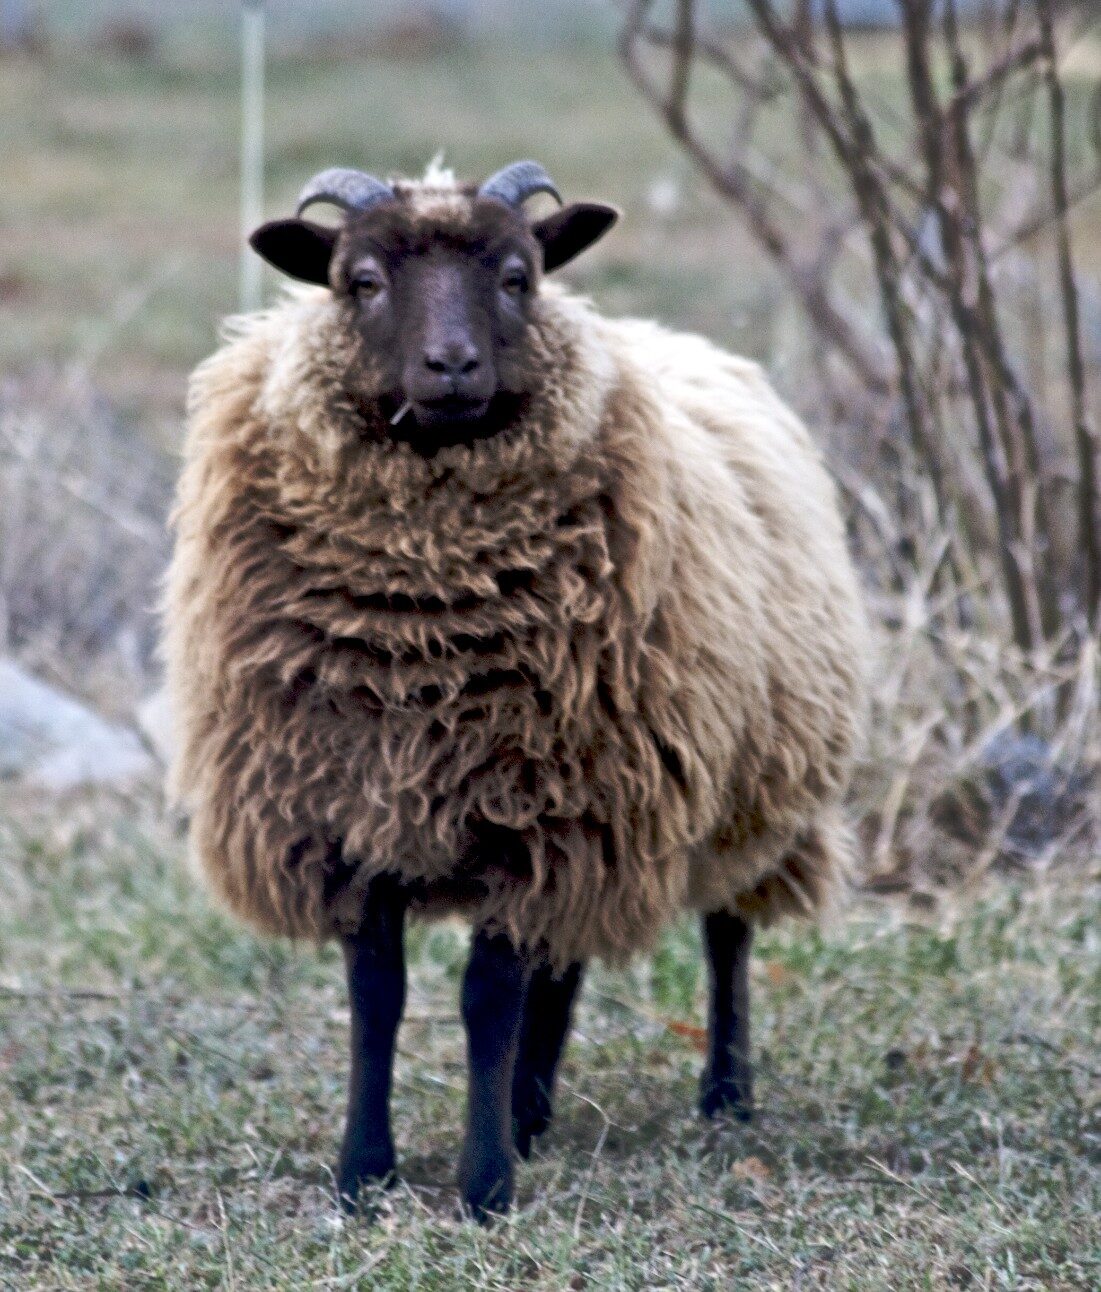 Race de viande et de laine de mouton Tashlinskaya: description, origine, élevage